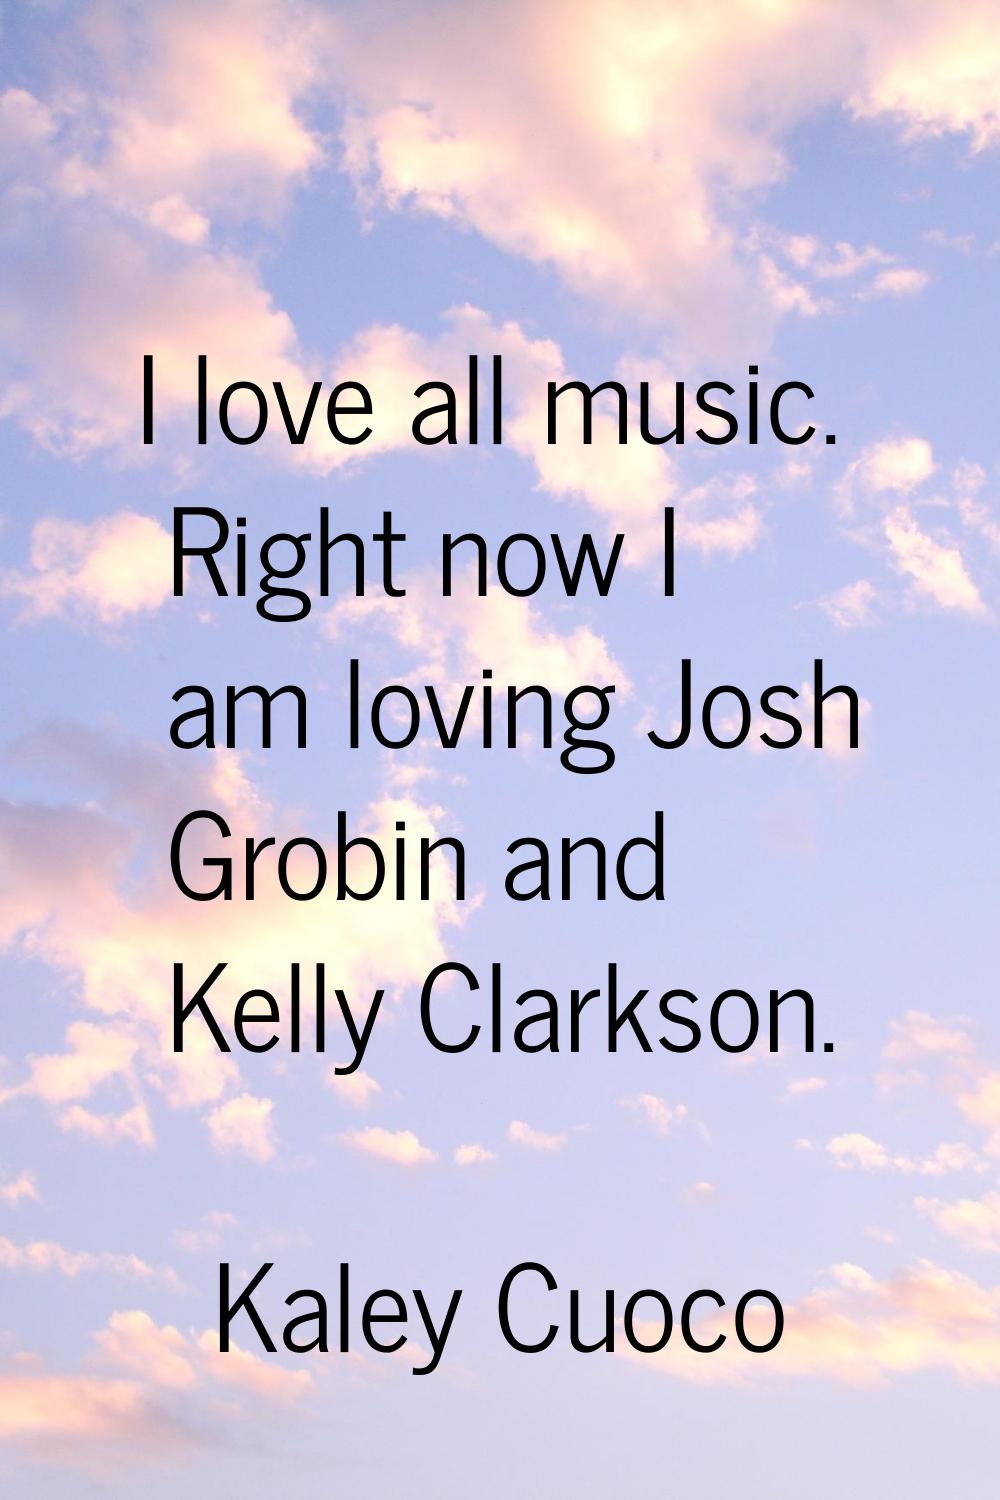 I love all music. Right now I am loving Josh Grobin and Kelly Clarkson.